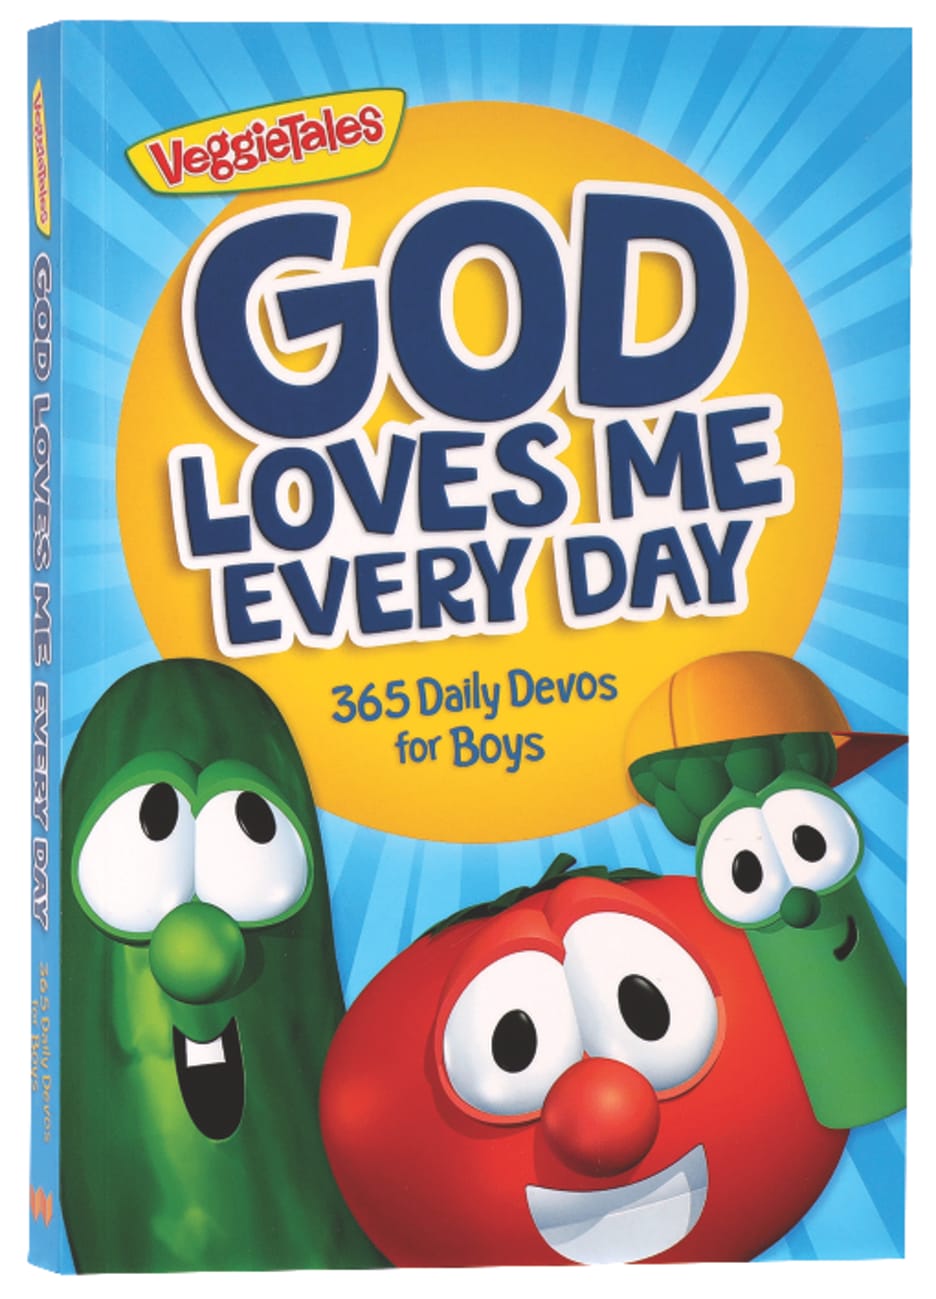 God Loves Me Every Day: 365 Daily Devos For Boys (Veggie Tales (Veggietales) Series) Paperback